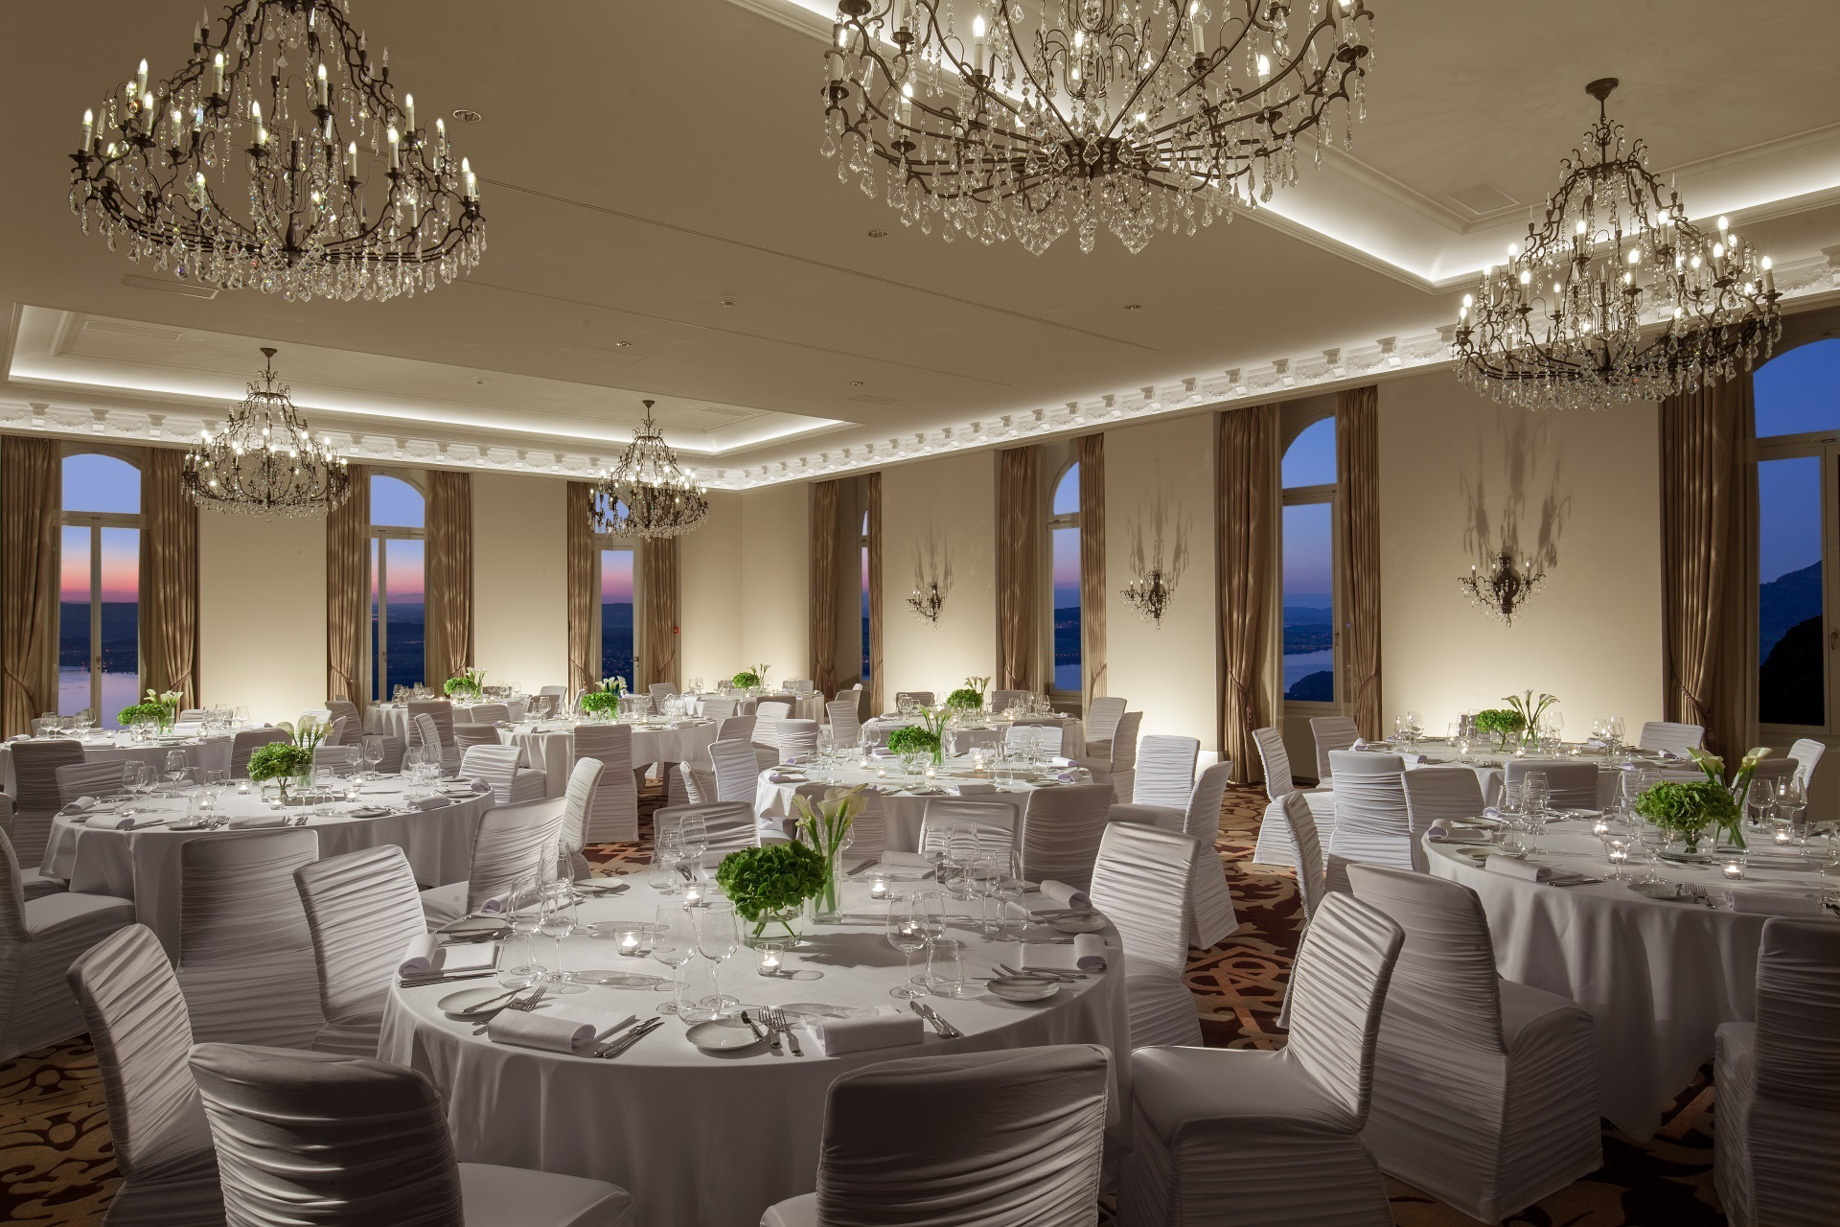 Burgenstock Hotel & Alpine Spa – Obburgen, Switzerland – Conference Room Dining Setup